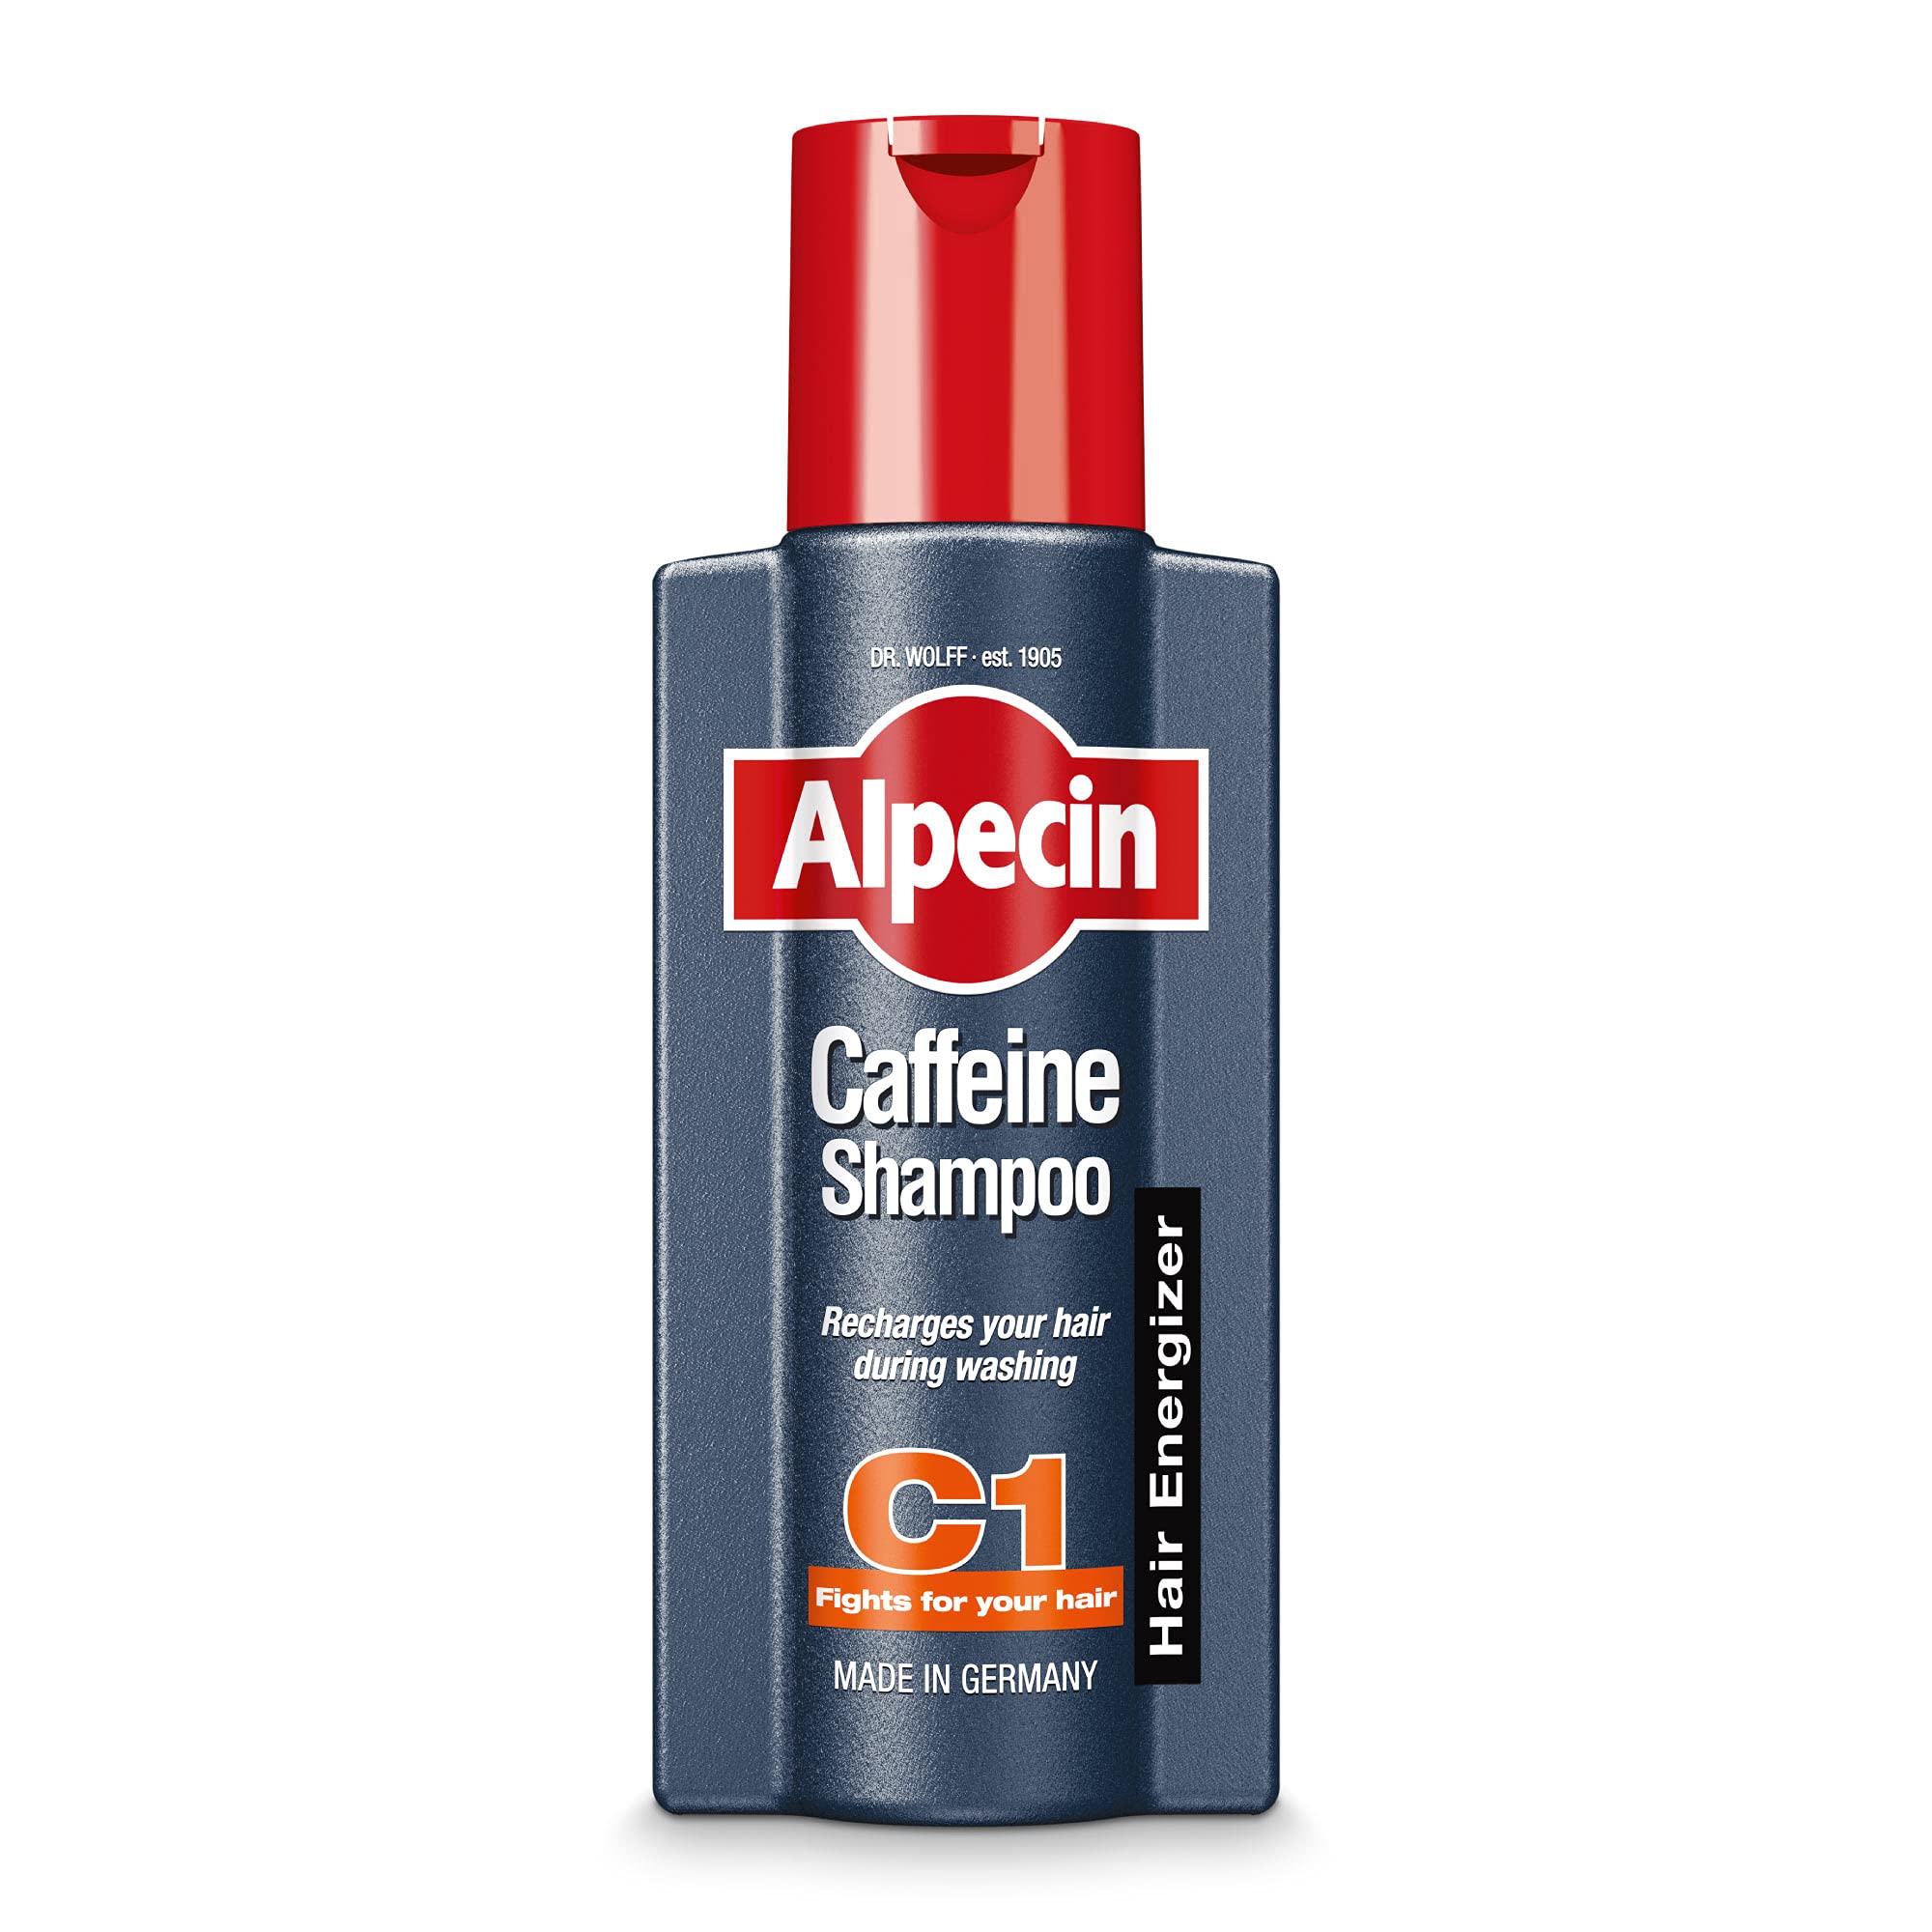 szampon z coffeina alpacina